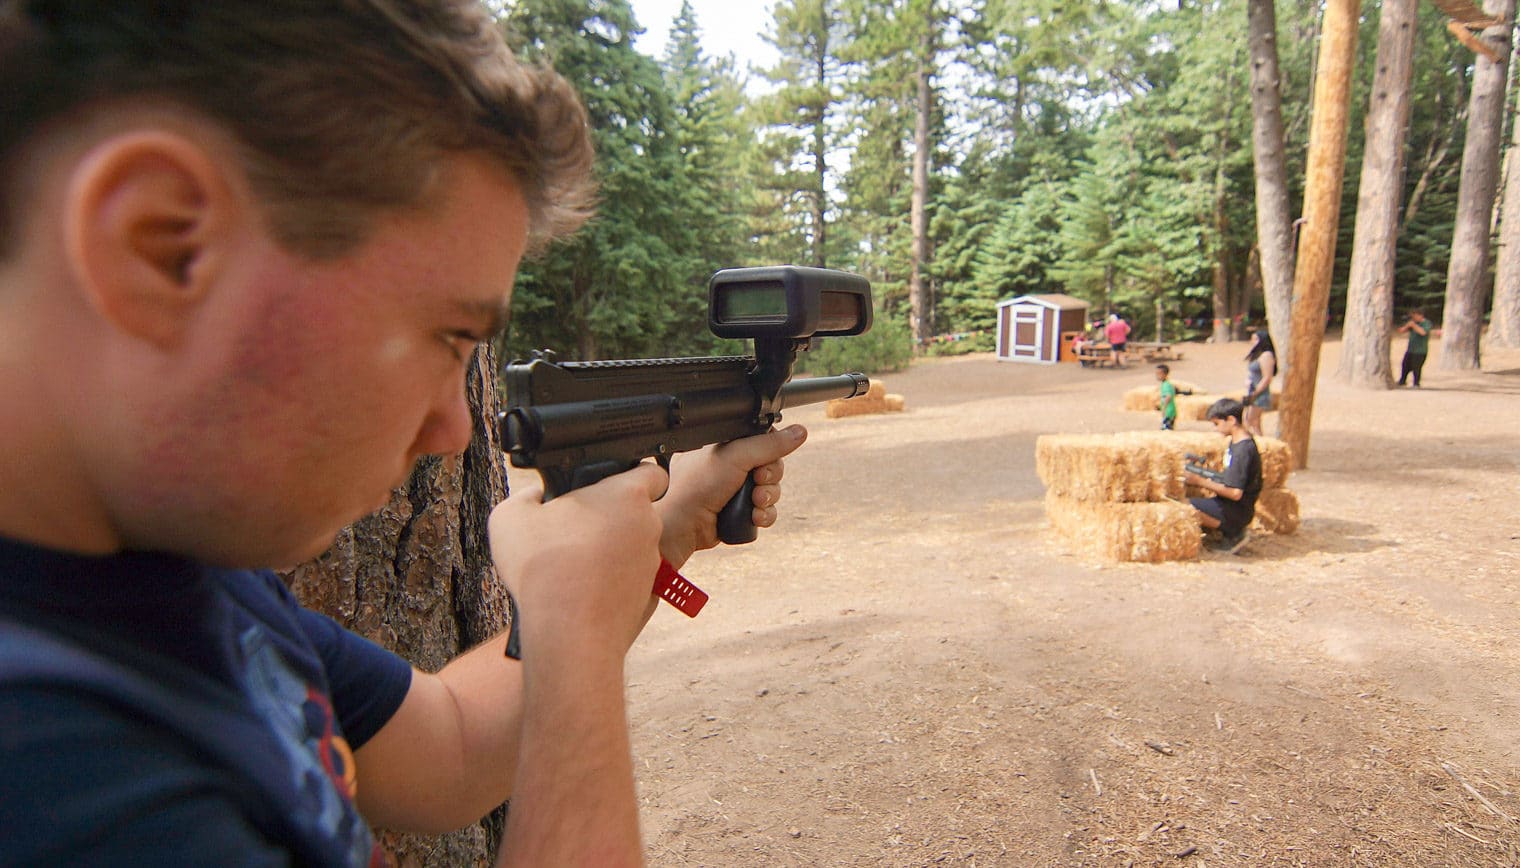 A close up of a boy aiming a laser tag gun.